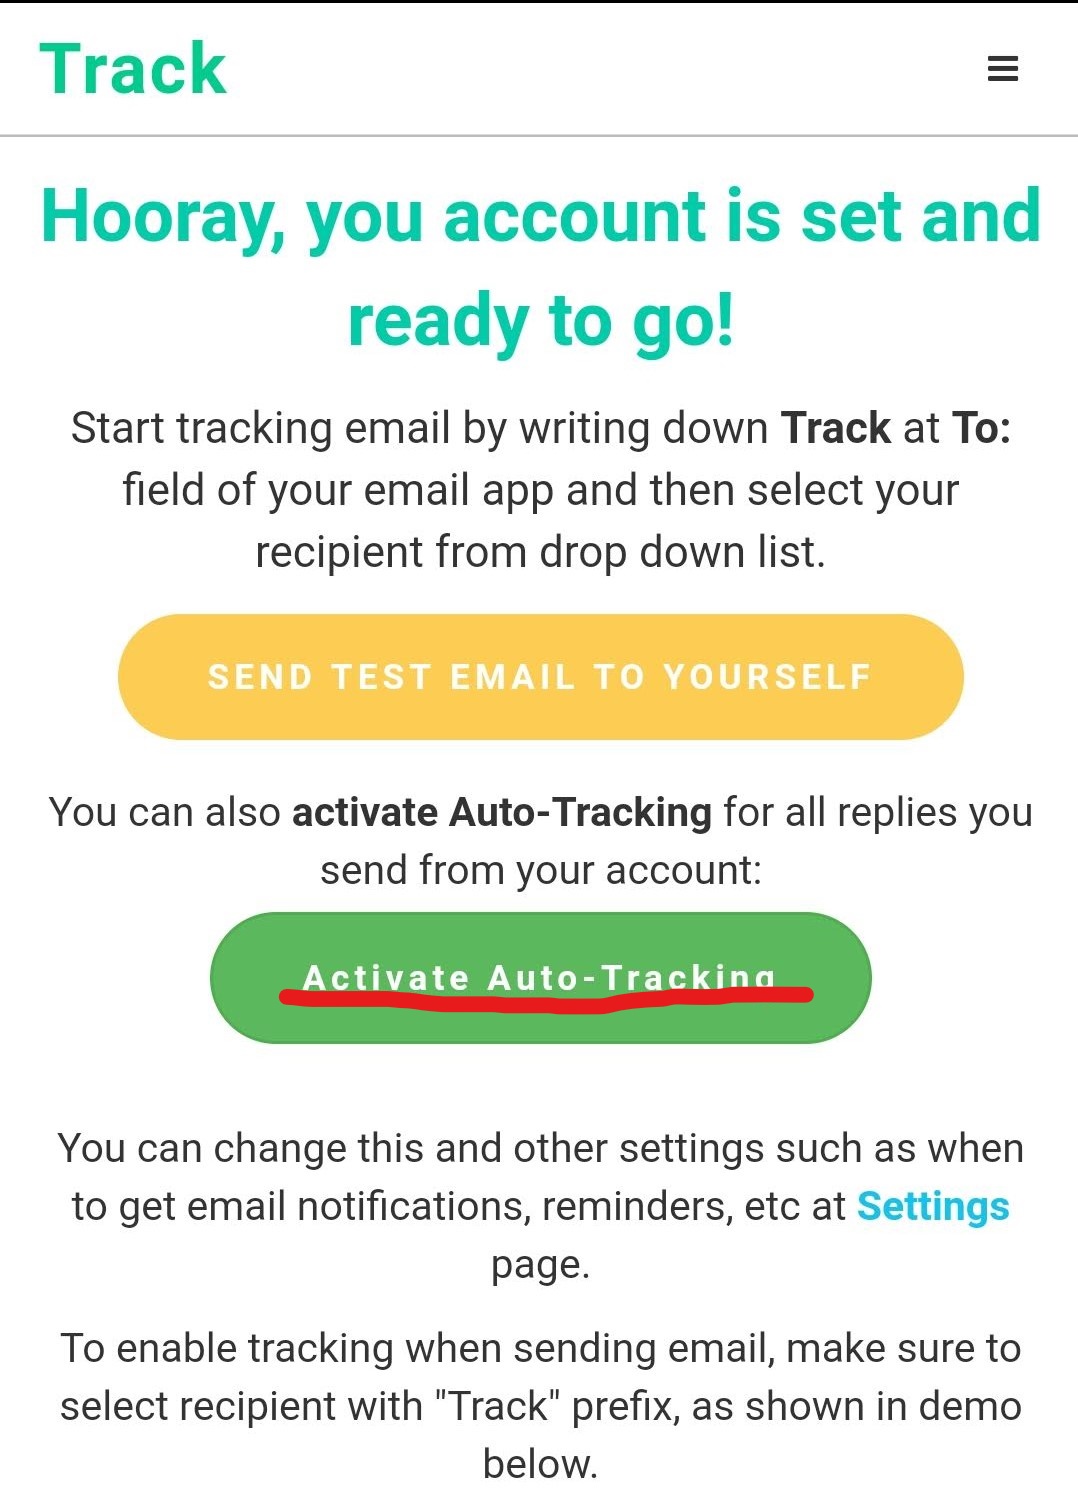 Trackのオートトラッキング(Gmailの追跡)を有効化